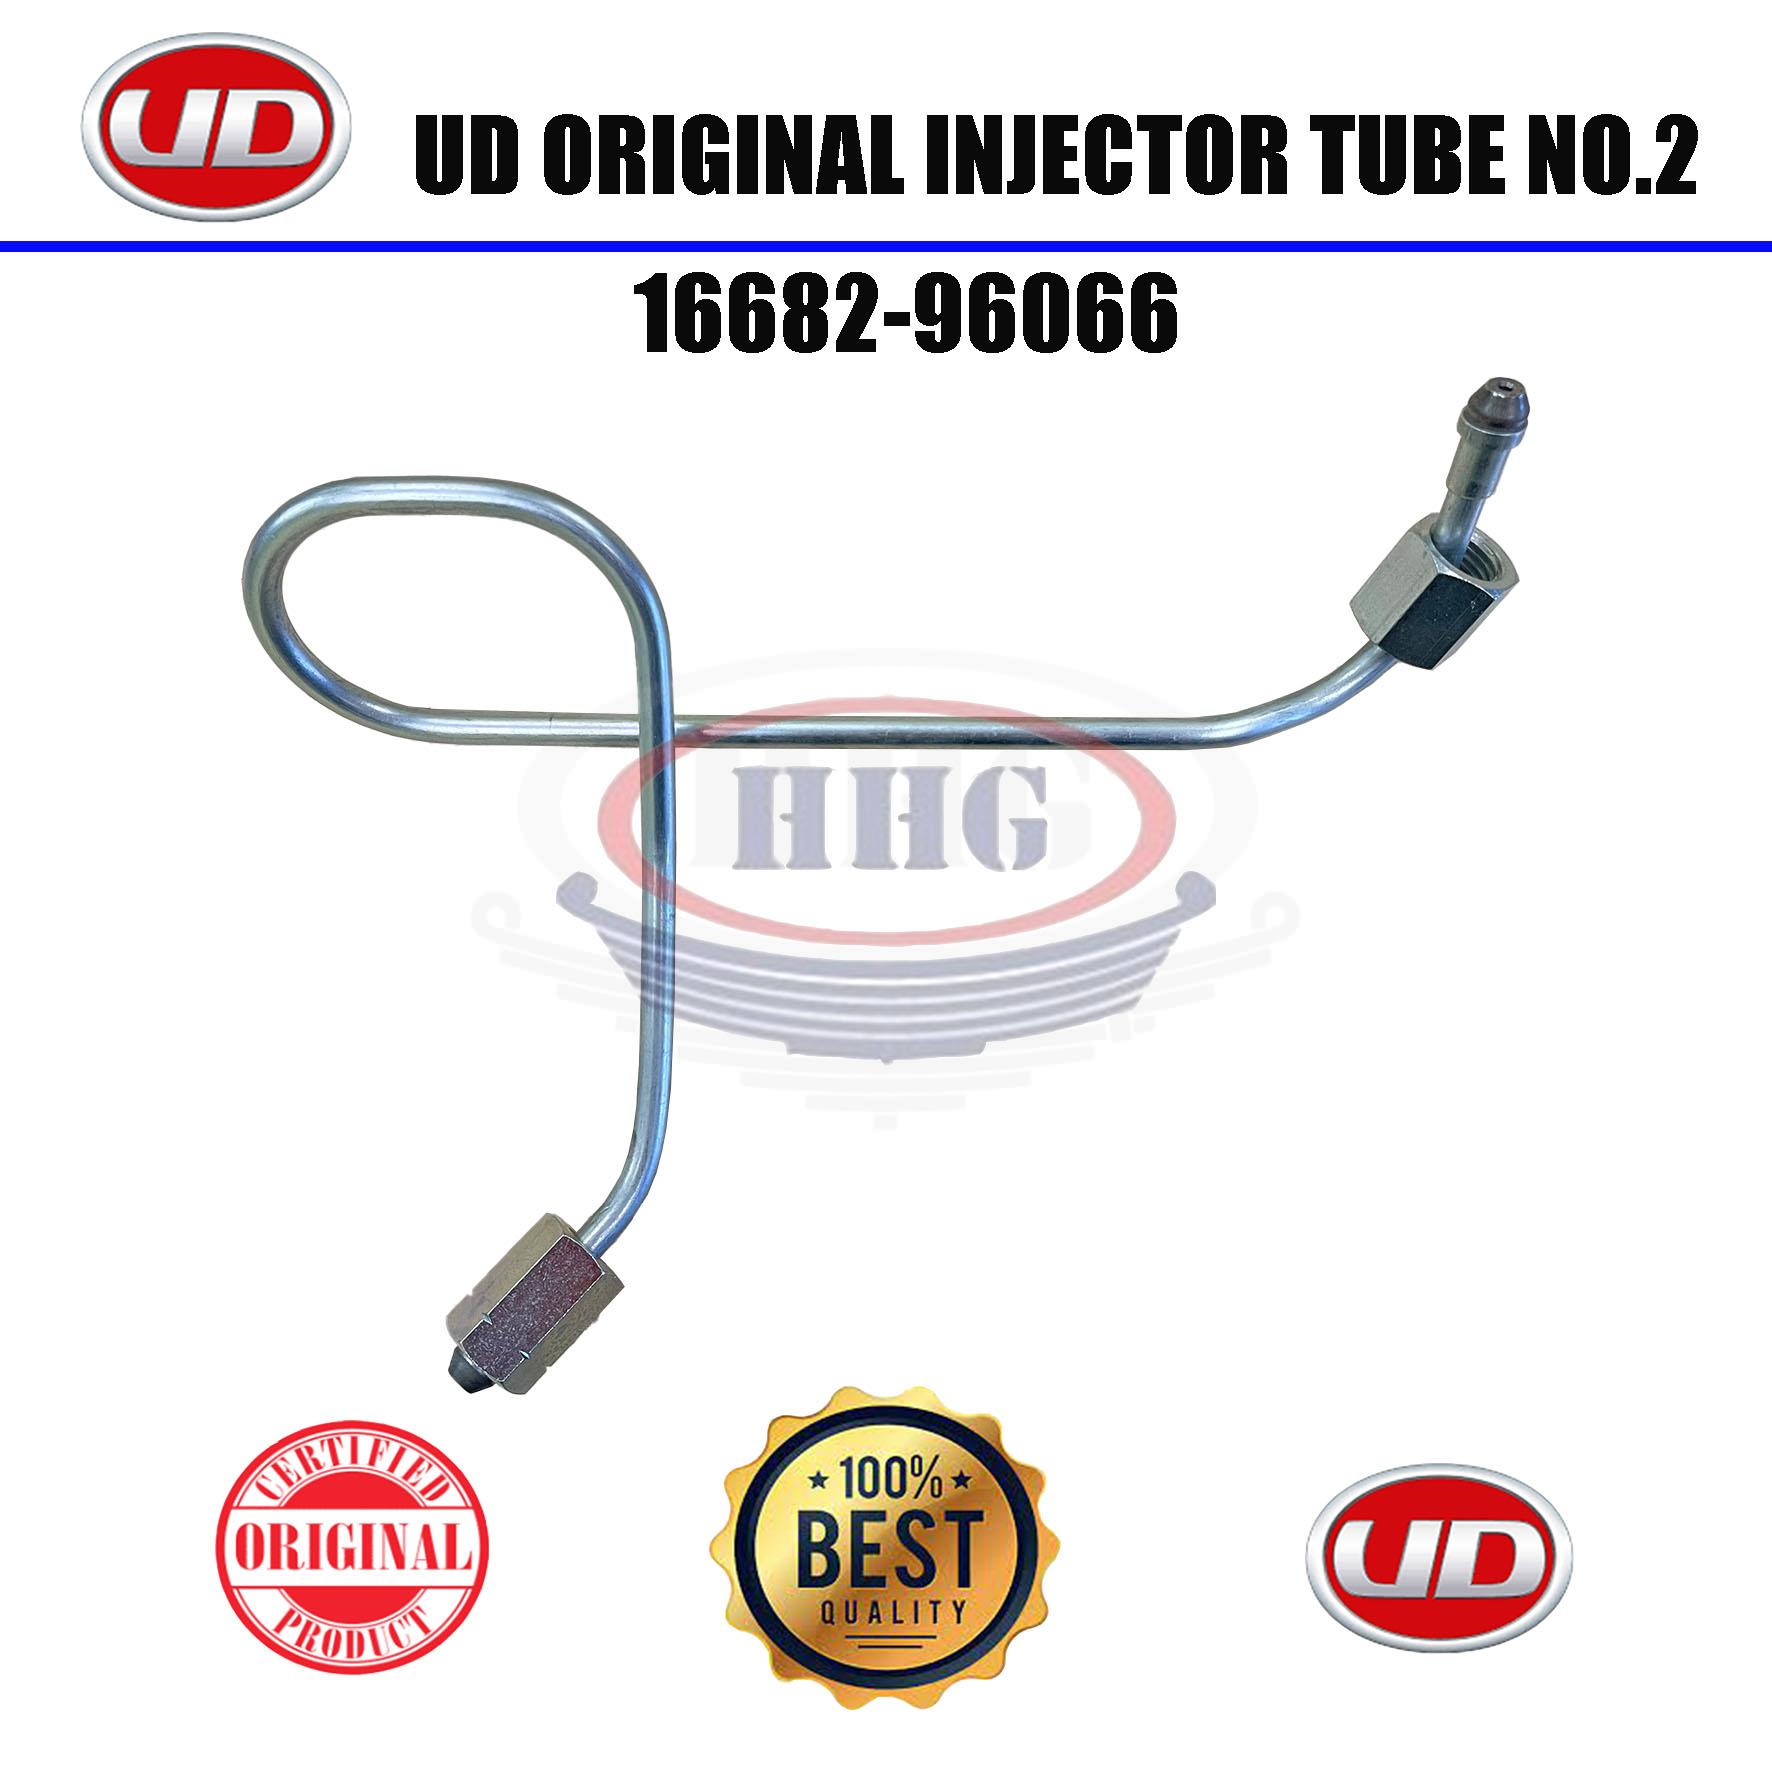 UD Original PE6T PF6 Injector Tube No.2 (16682-96066)